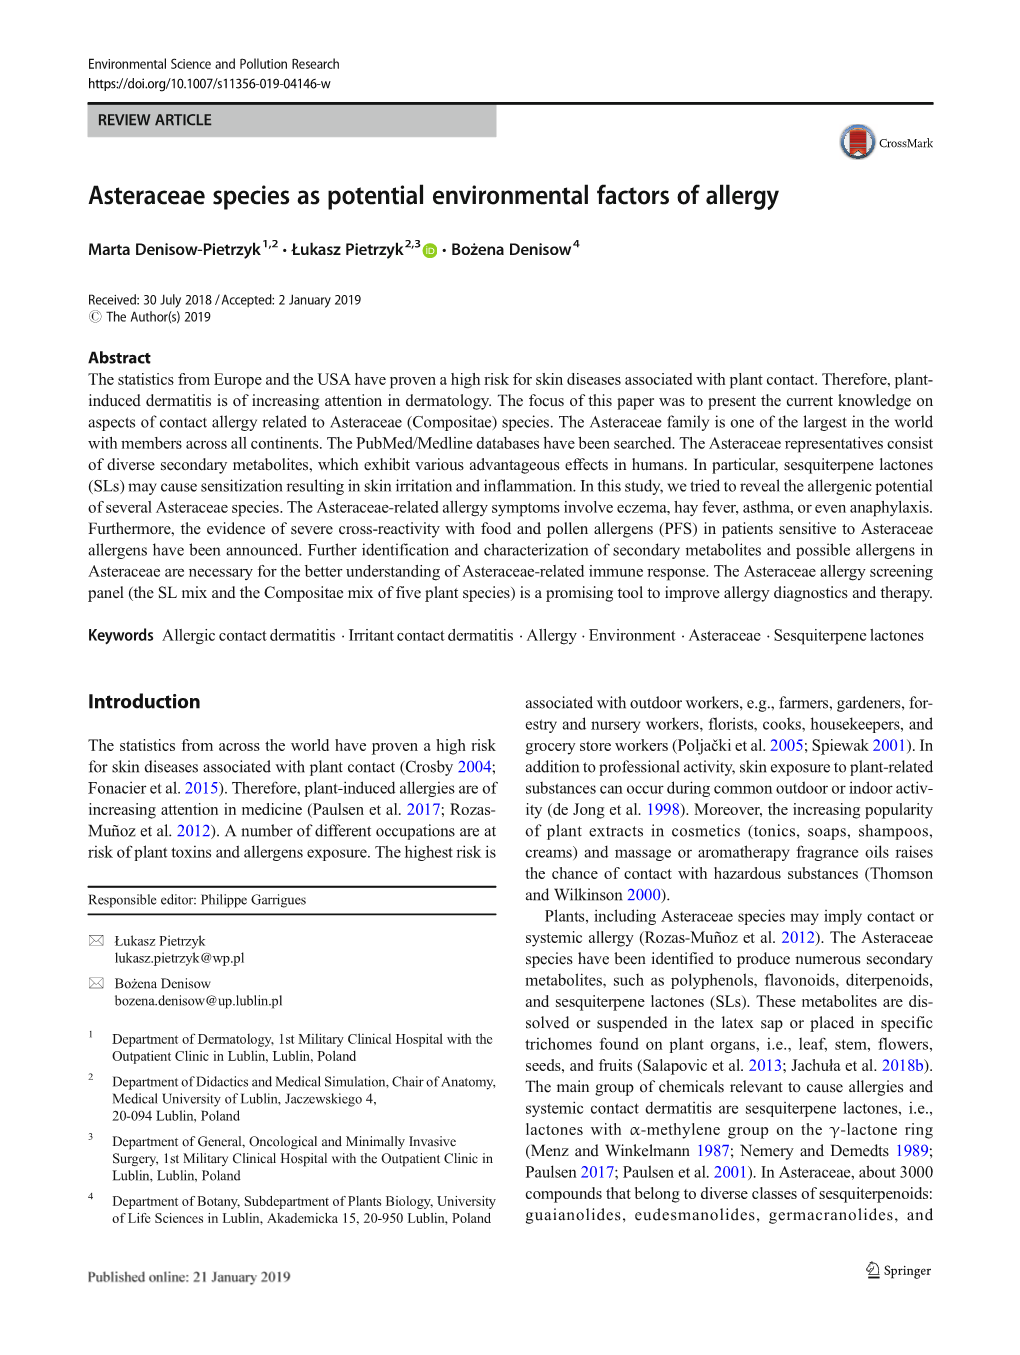 Asteraceae Species As Potential Environmental Factors of Allergy